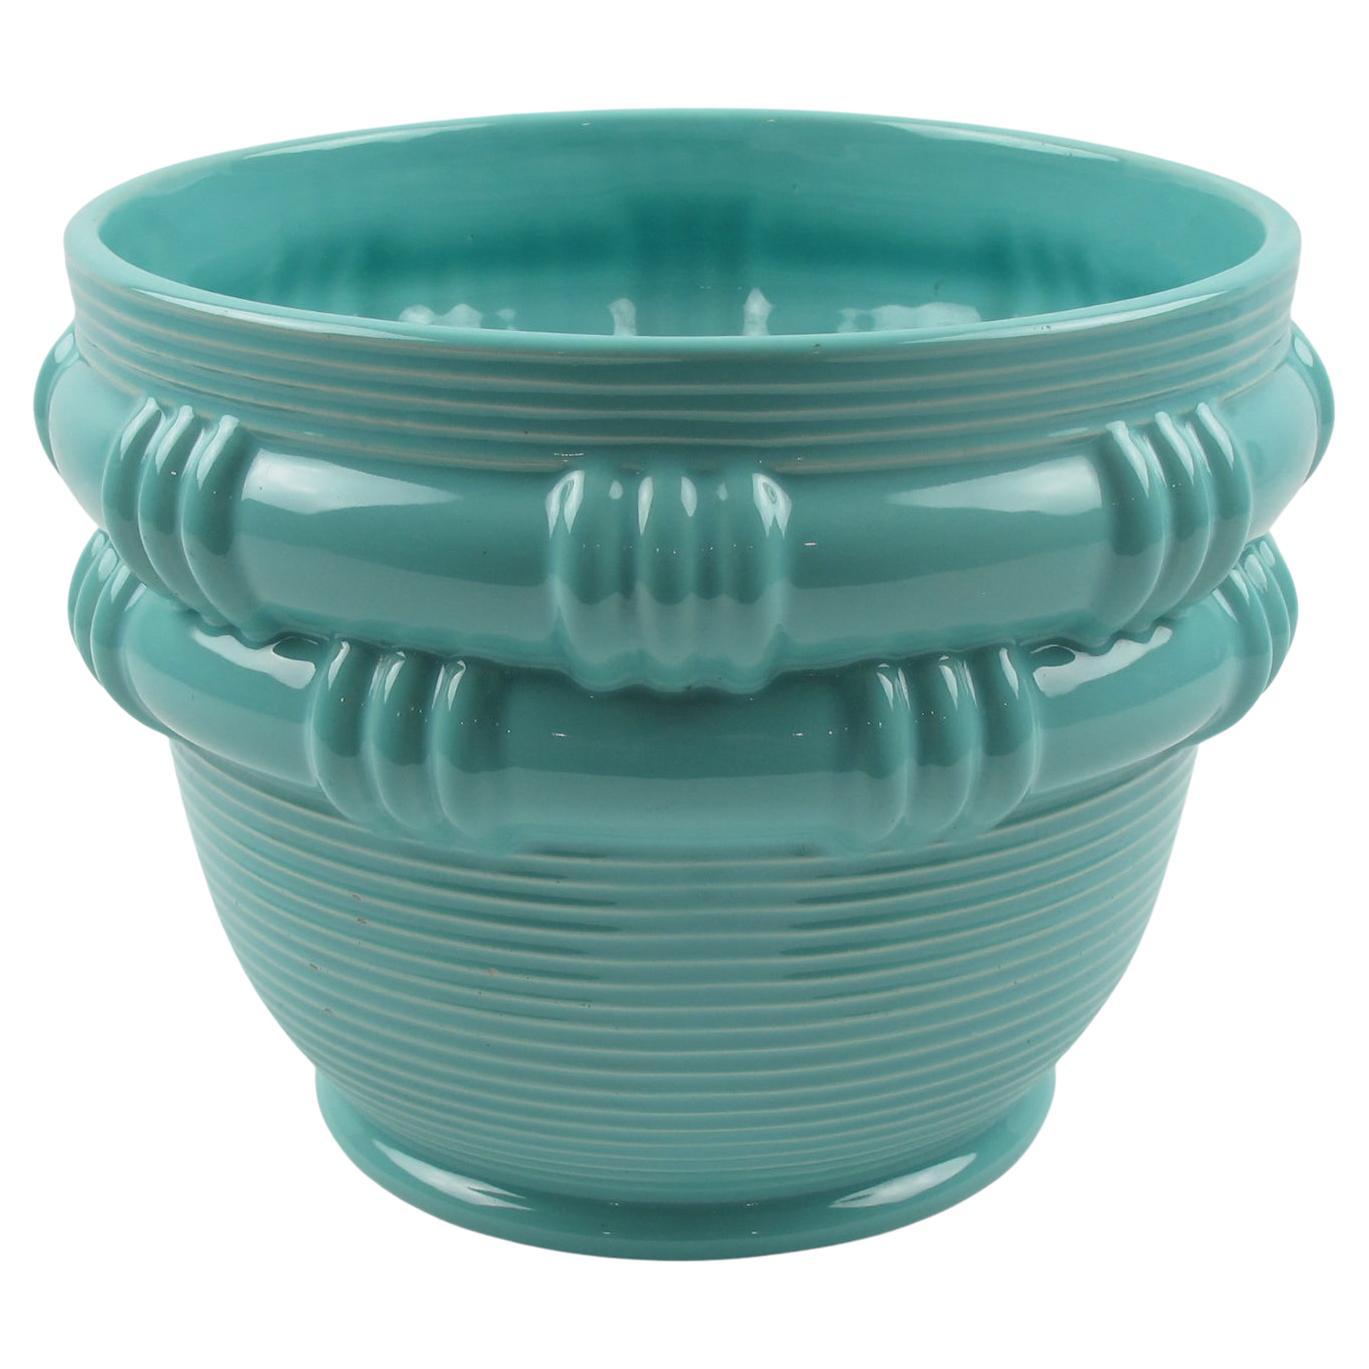 Blanche Letalle for Saint Clement Turquoise Ceramic Vase Planter, 1950s